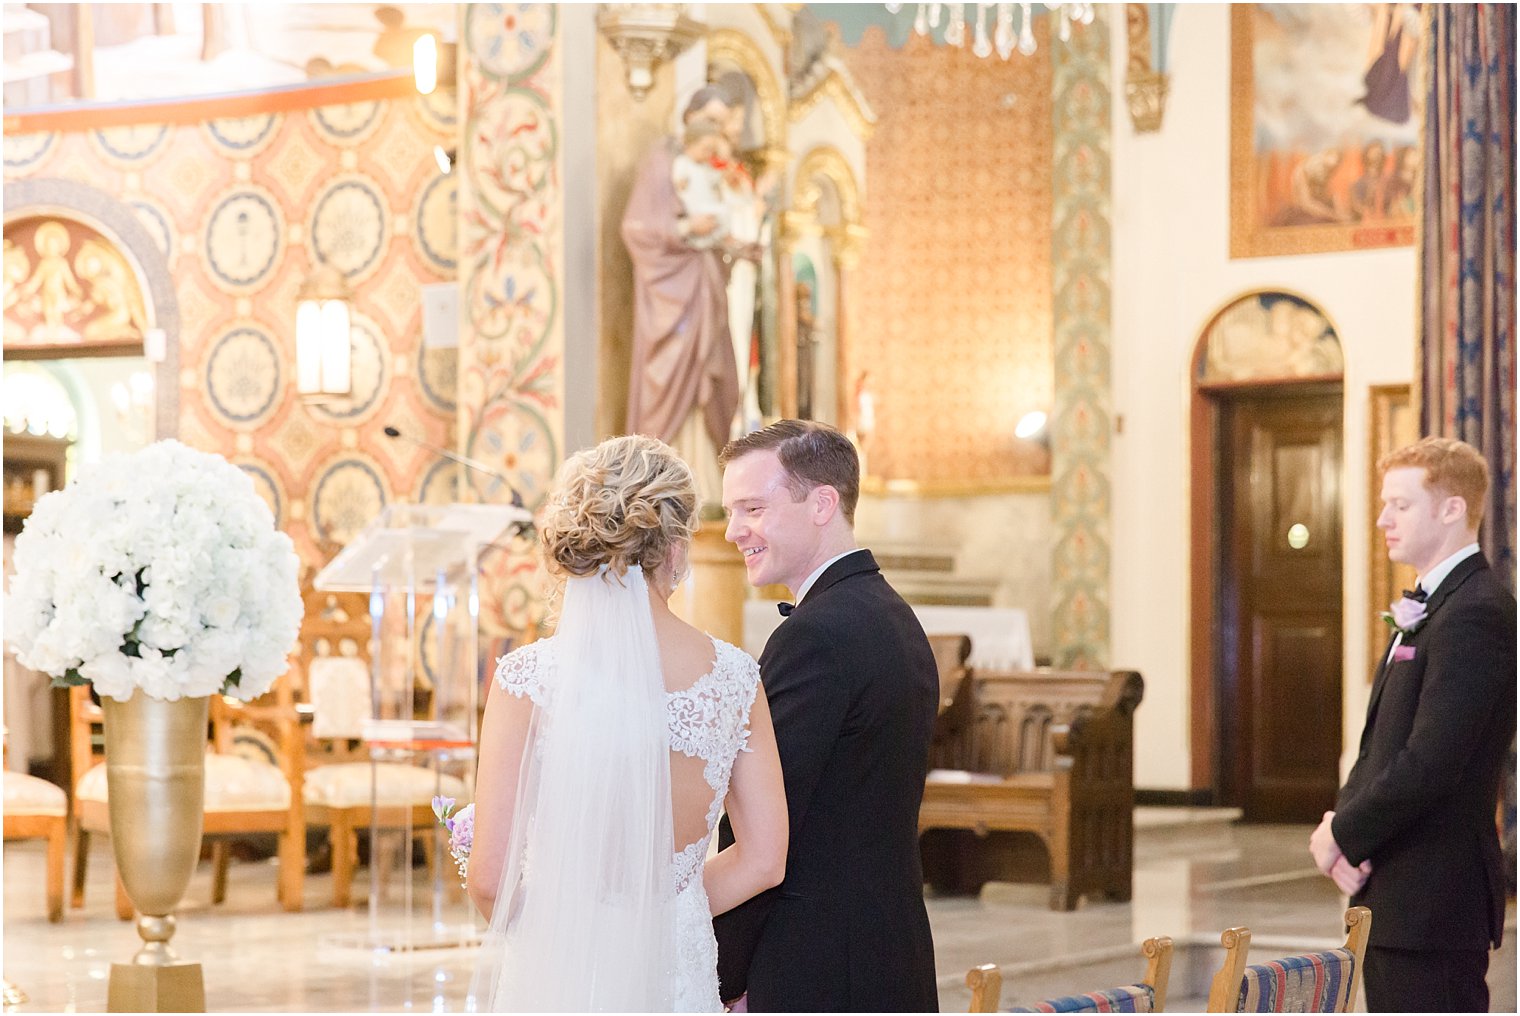 Wedding Ceremony at St. Casmir’s Polish Roman Catholic Church